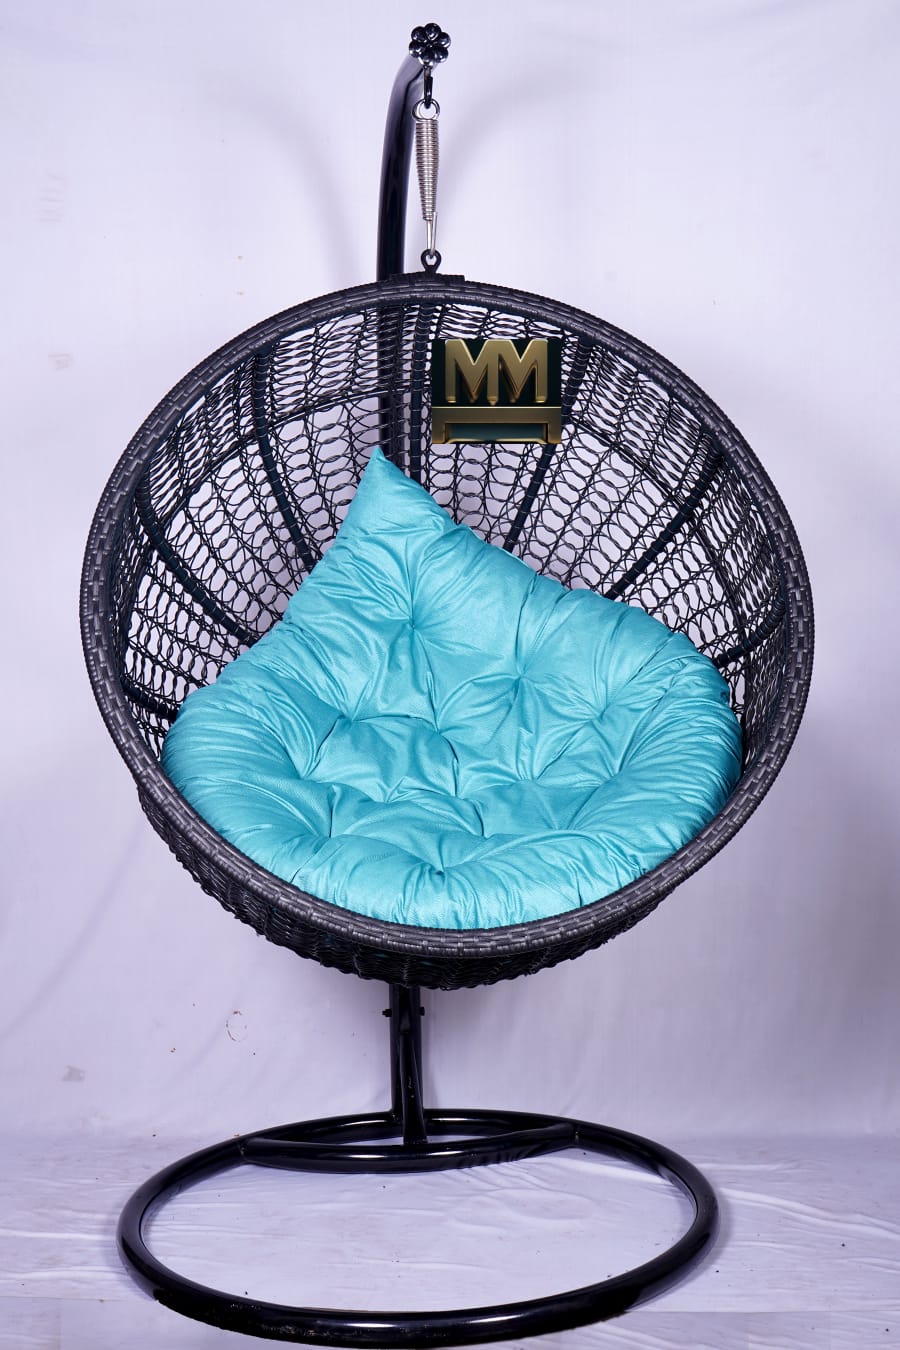 MM Furniture - Latest update - Swinging Chair Manufacturers Near Me